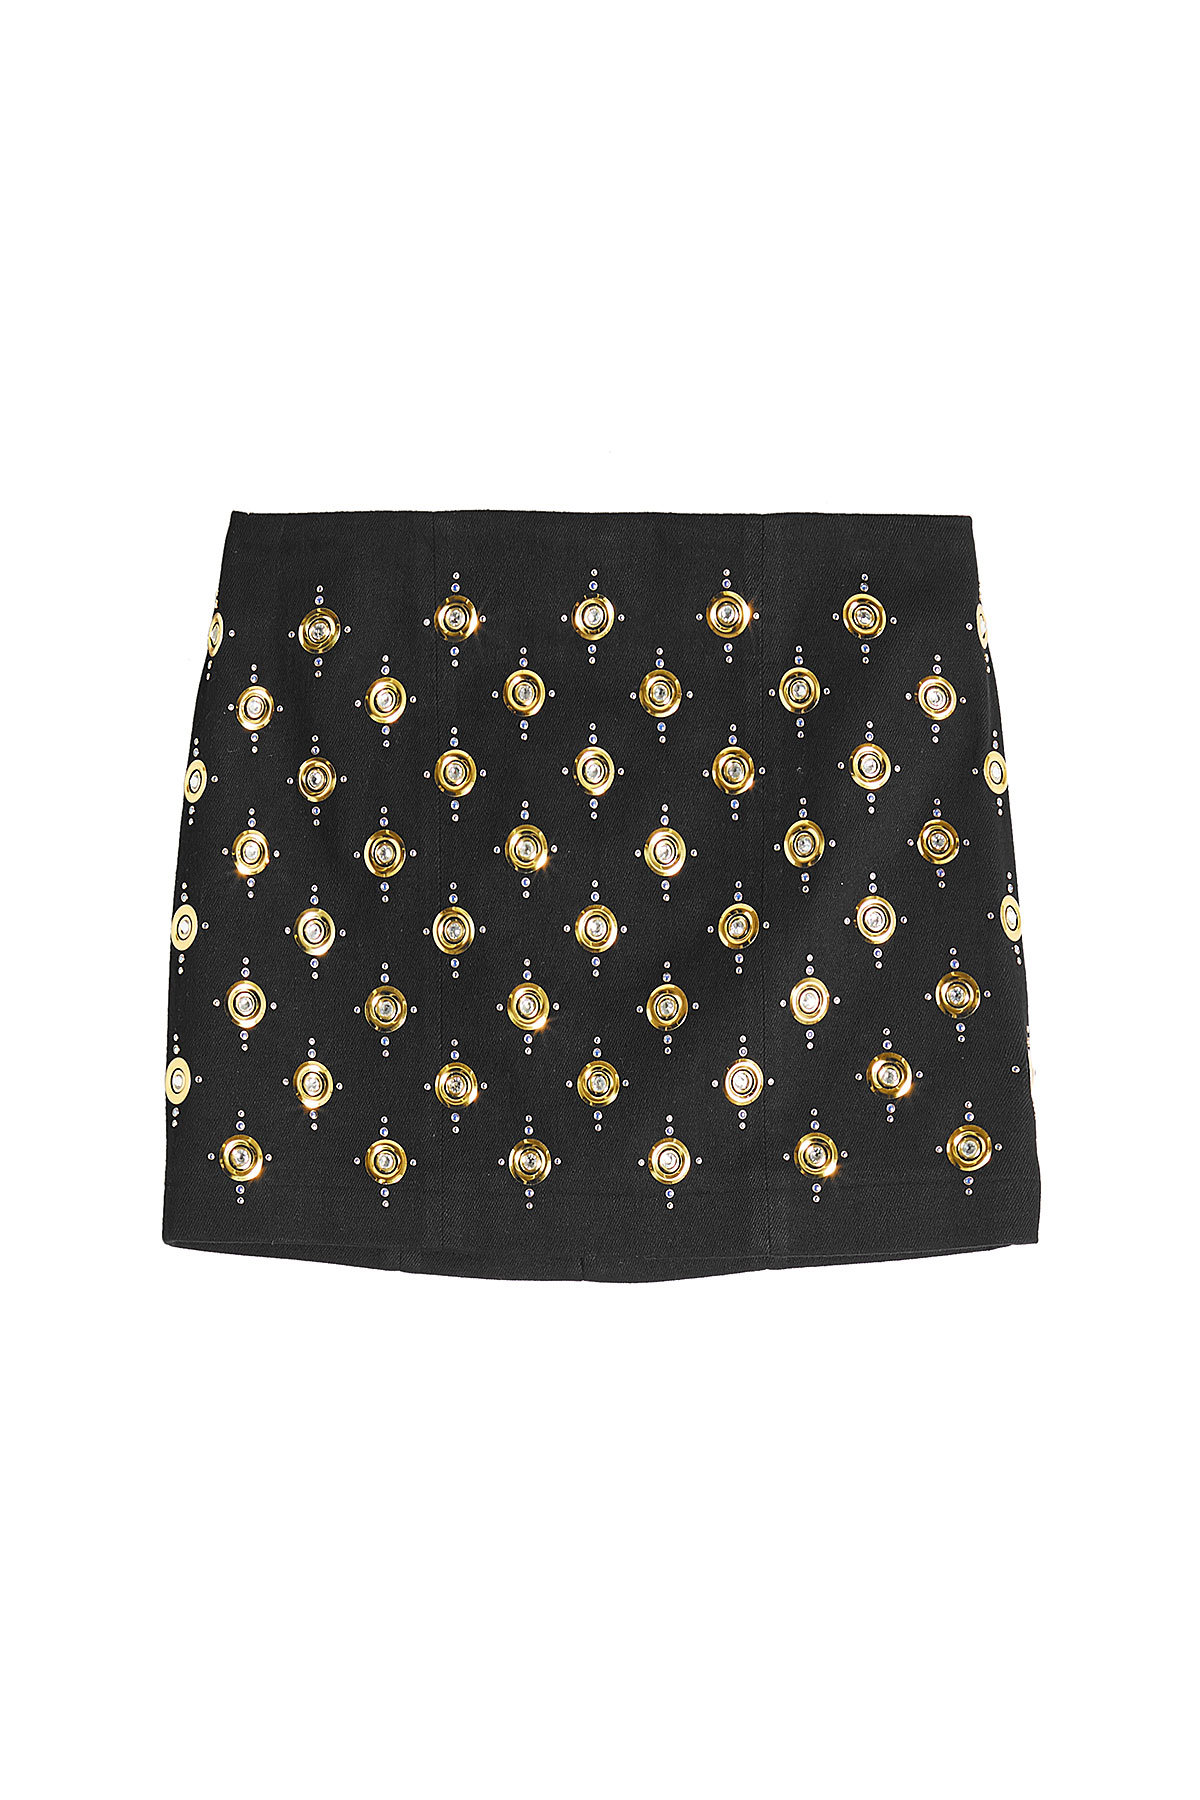 Balmain - Embellished Denim Skirt